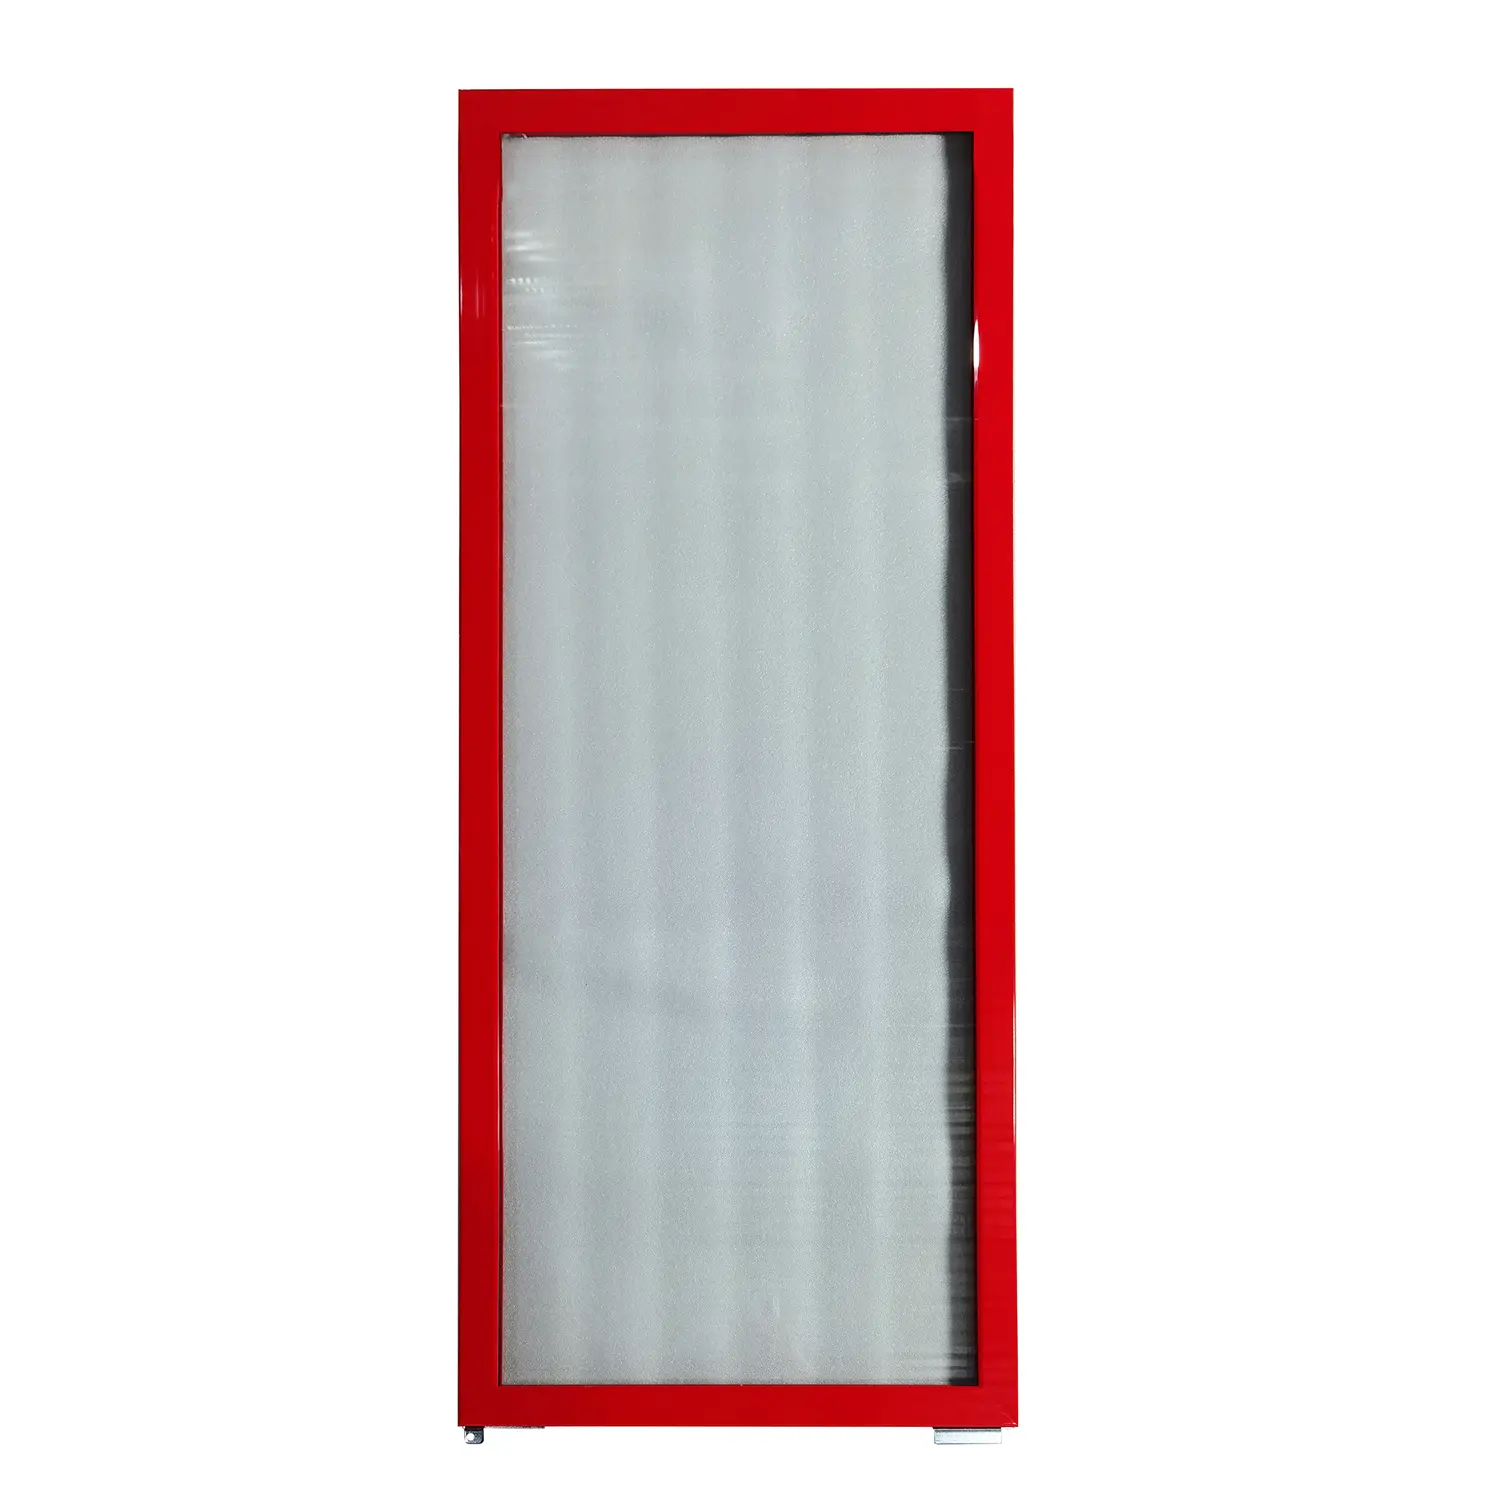 Bespoke Commercial Vertical Freezer Doors: 3D Digital Printing on Flat Glass by Yuebang